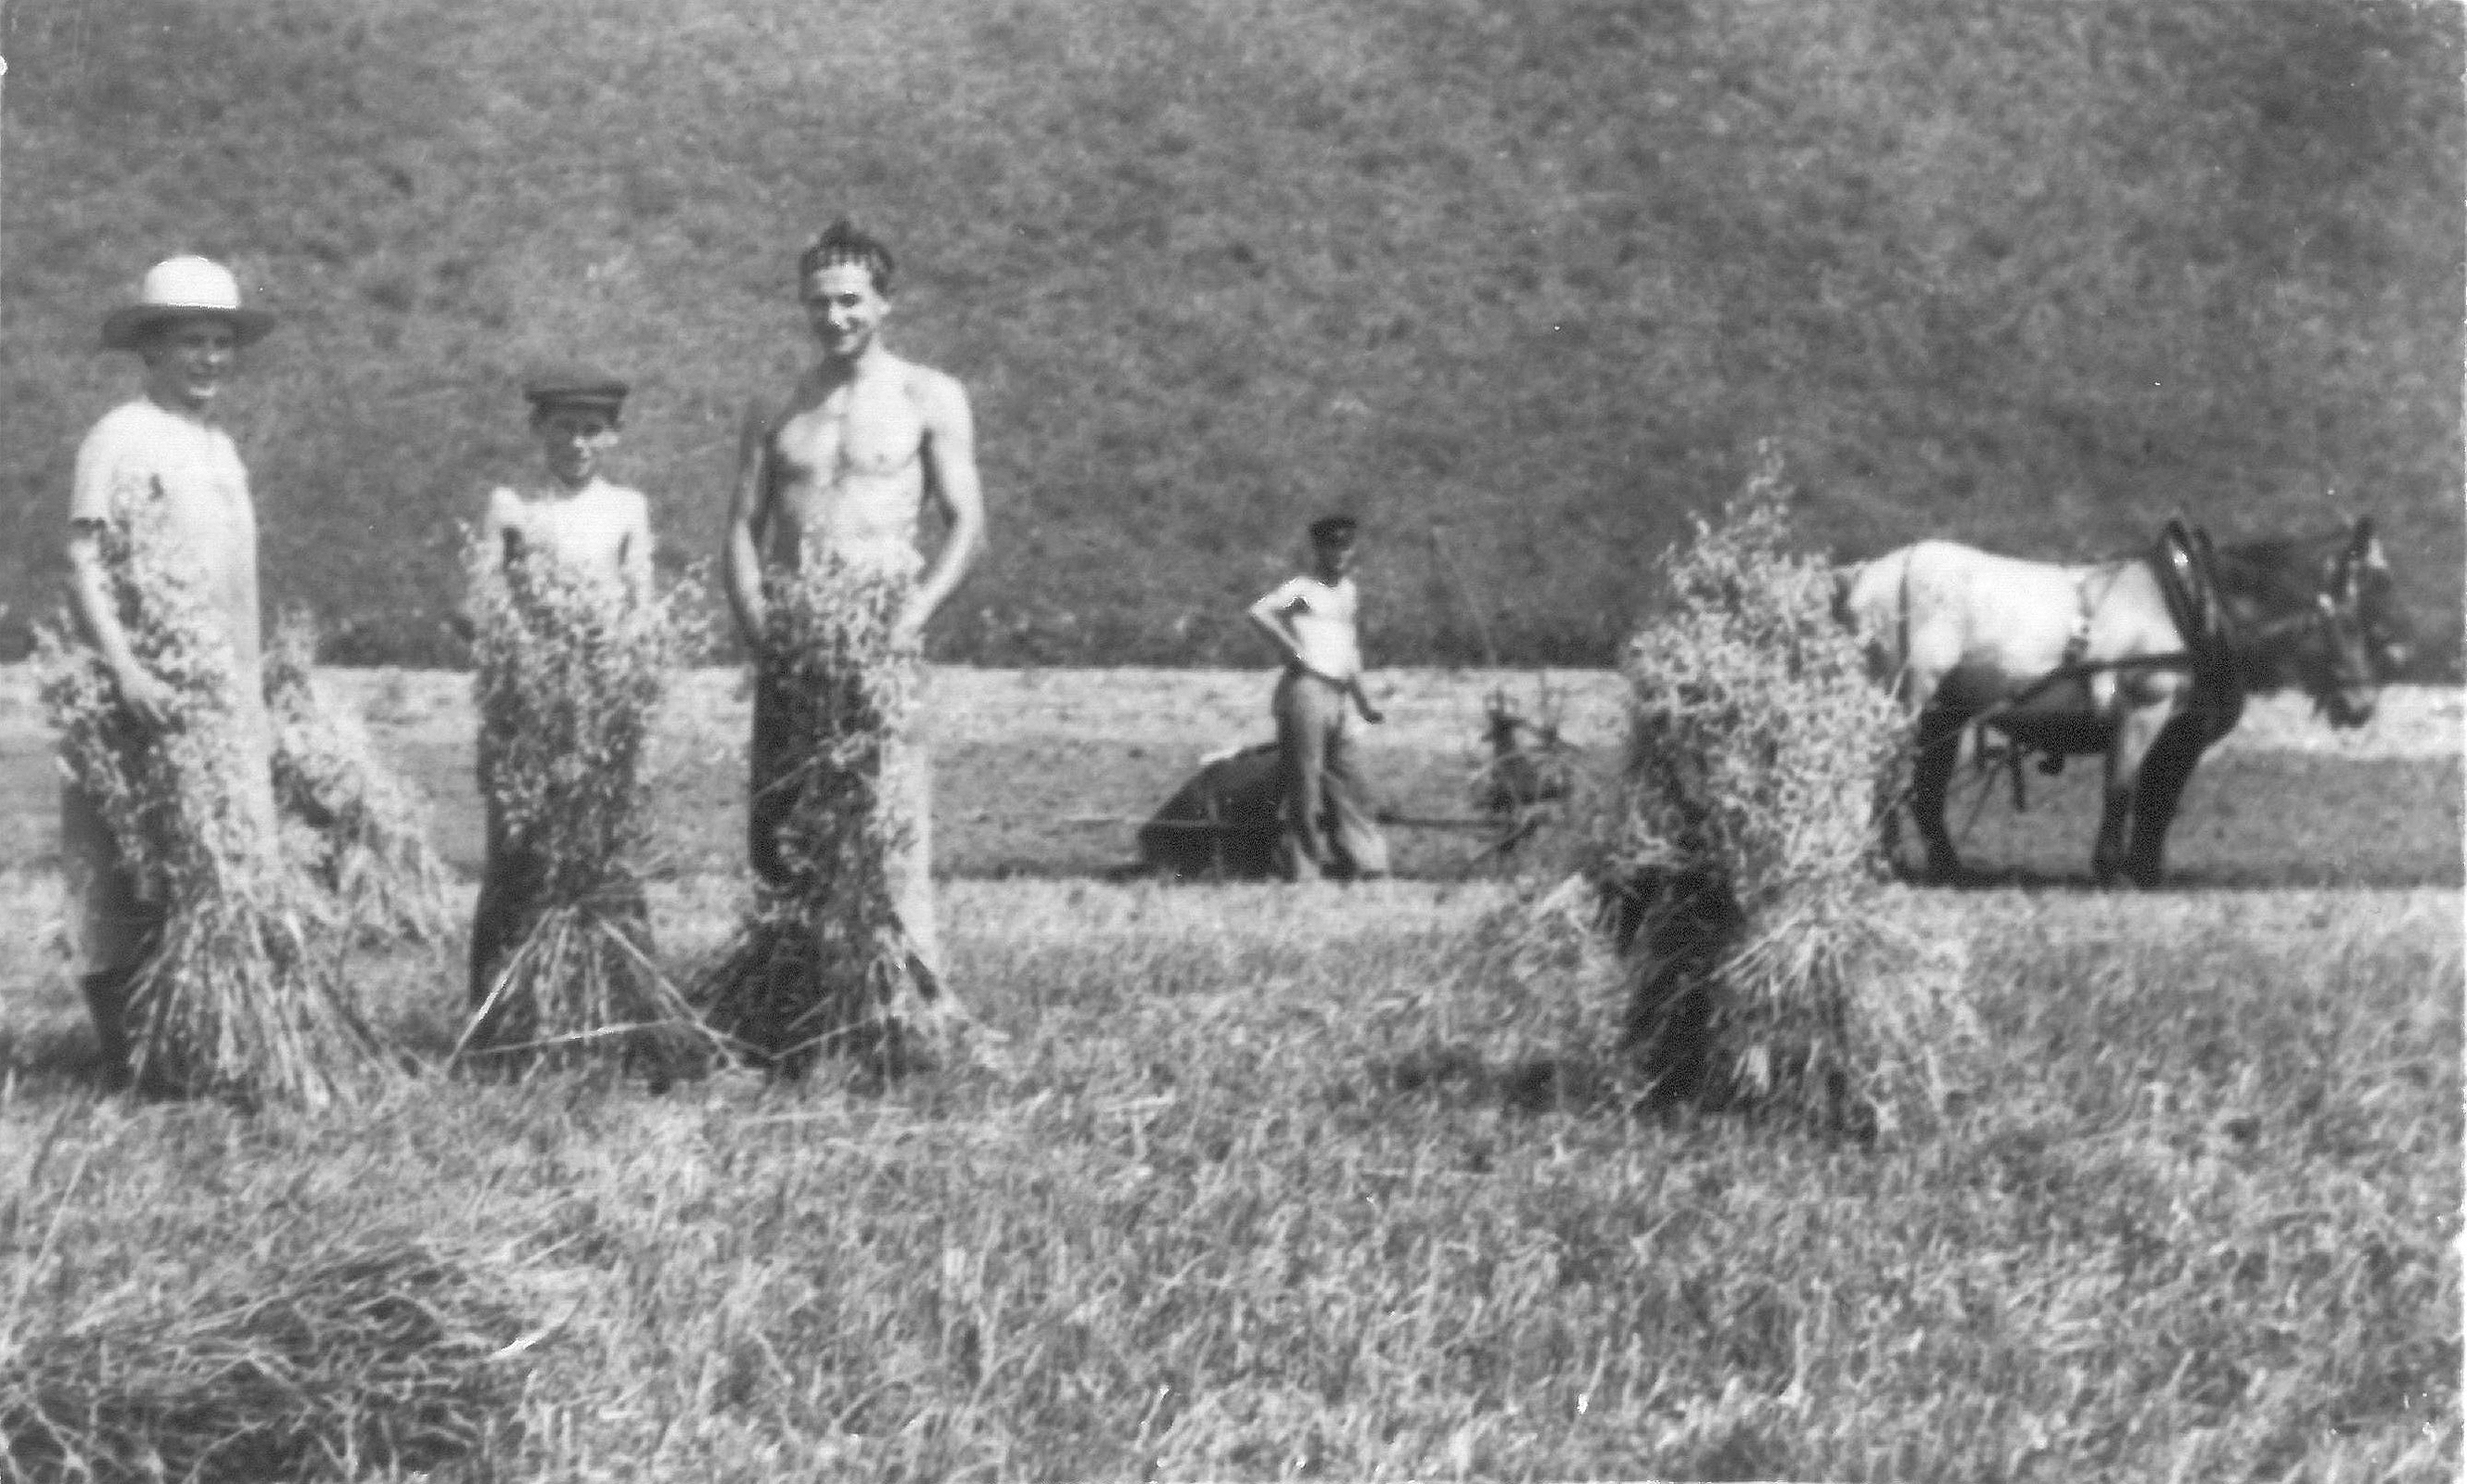 Arnold Wochenmark, third from left, as a farm laborer in Switzerland.